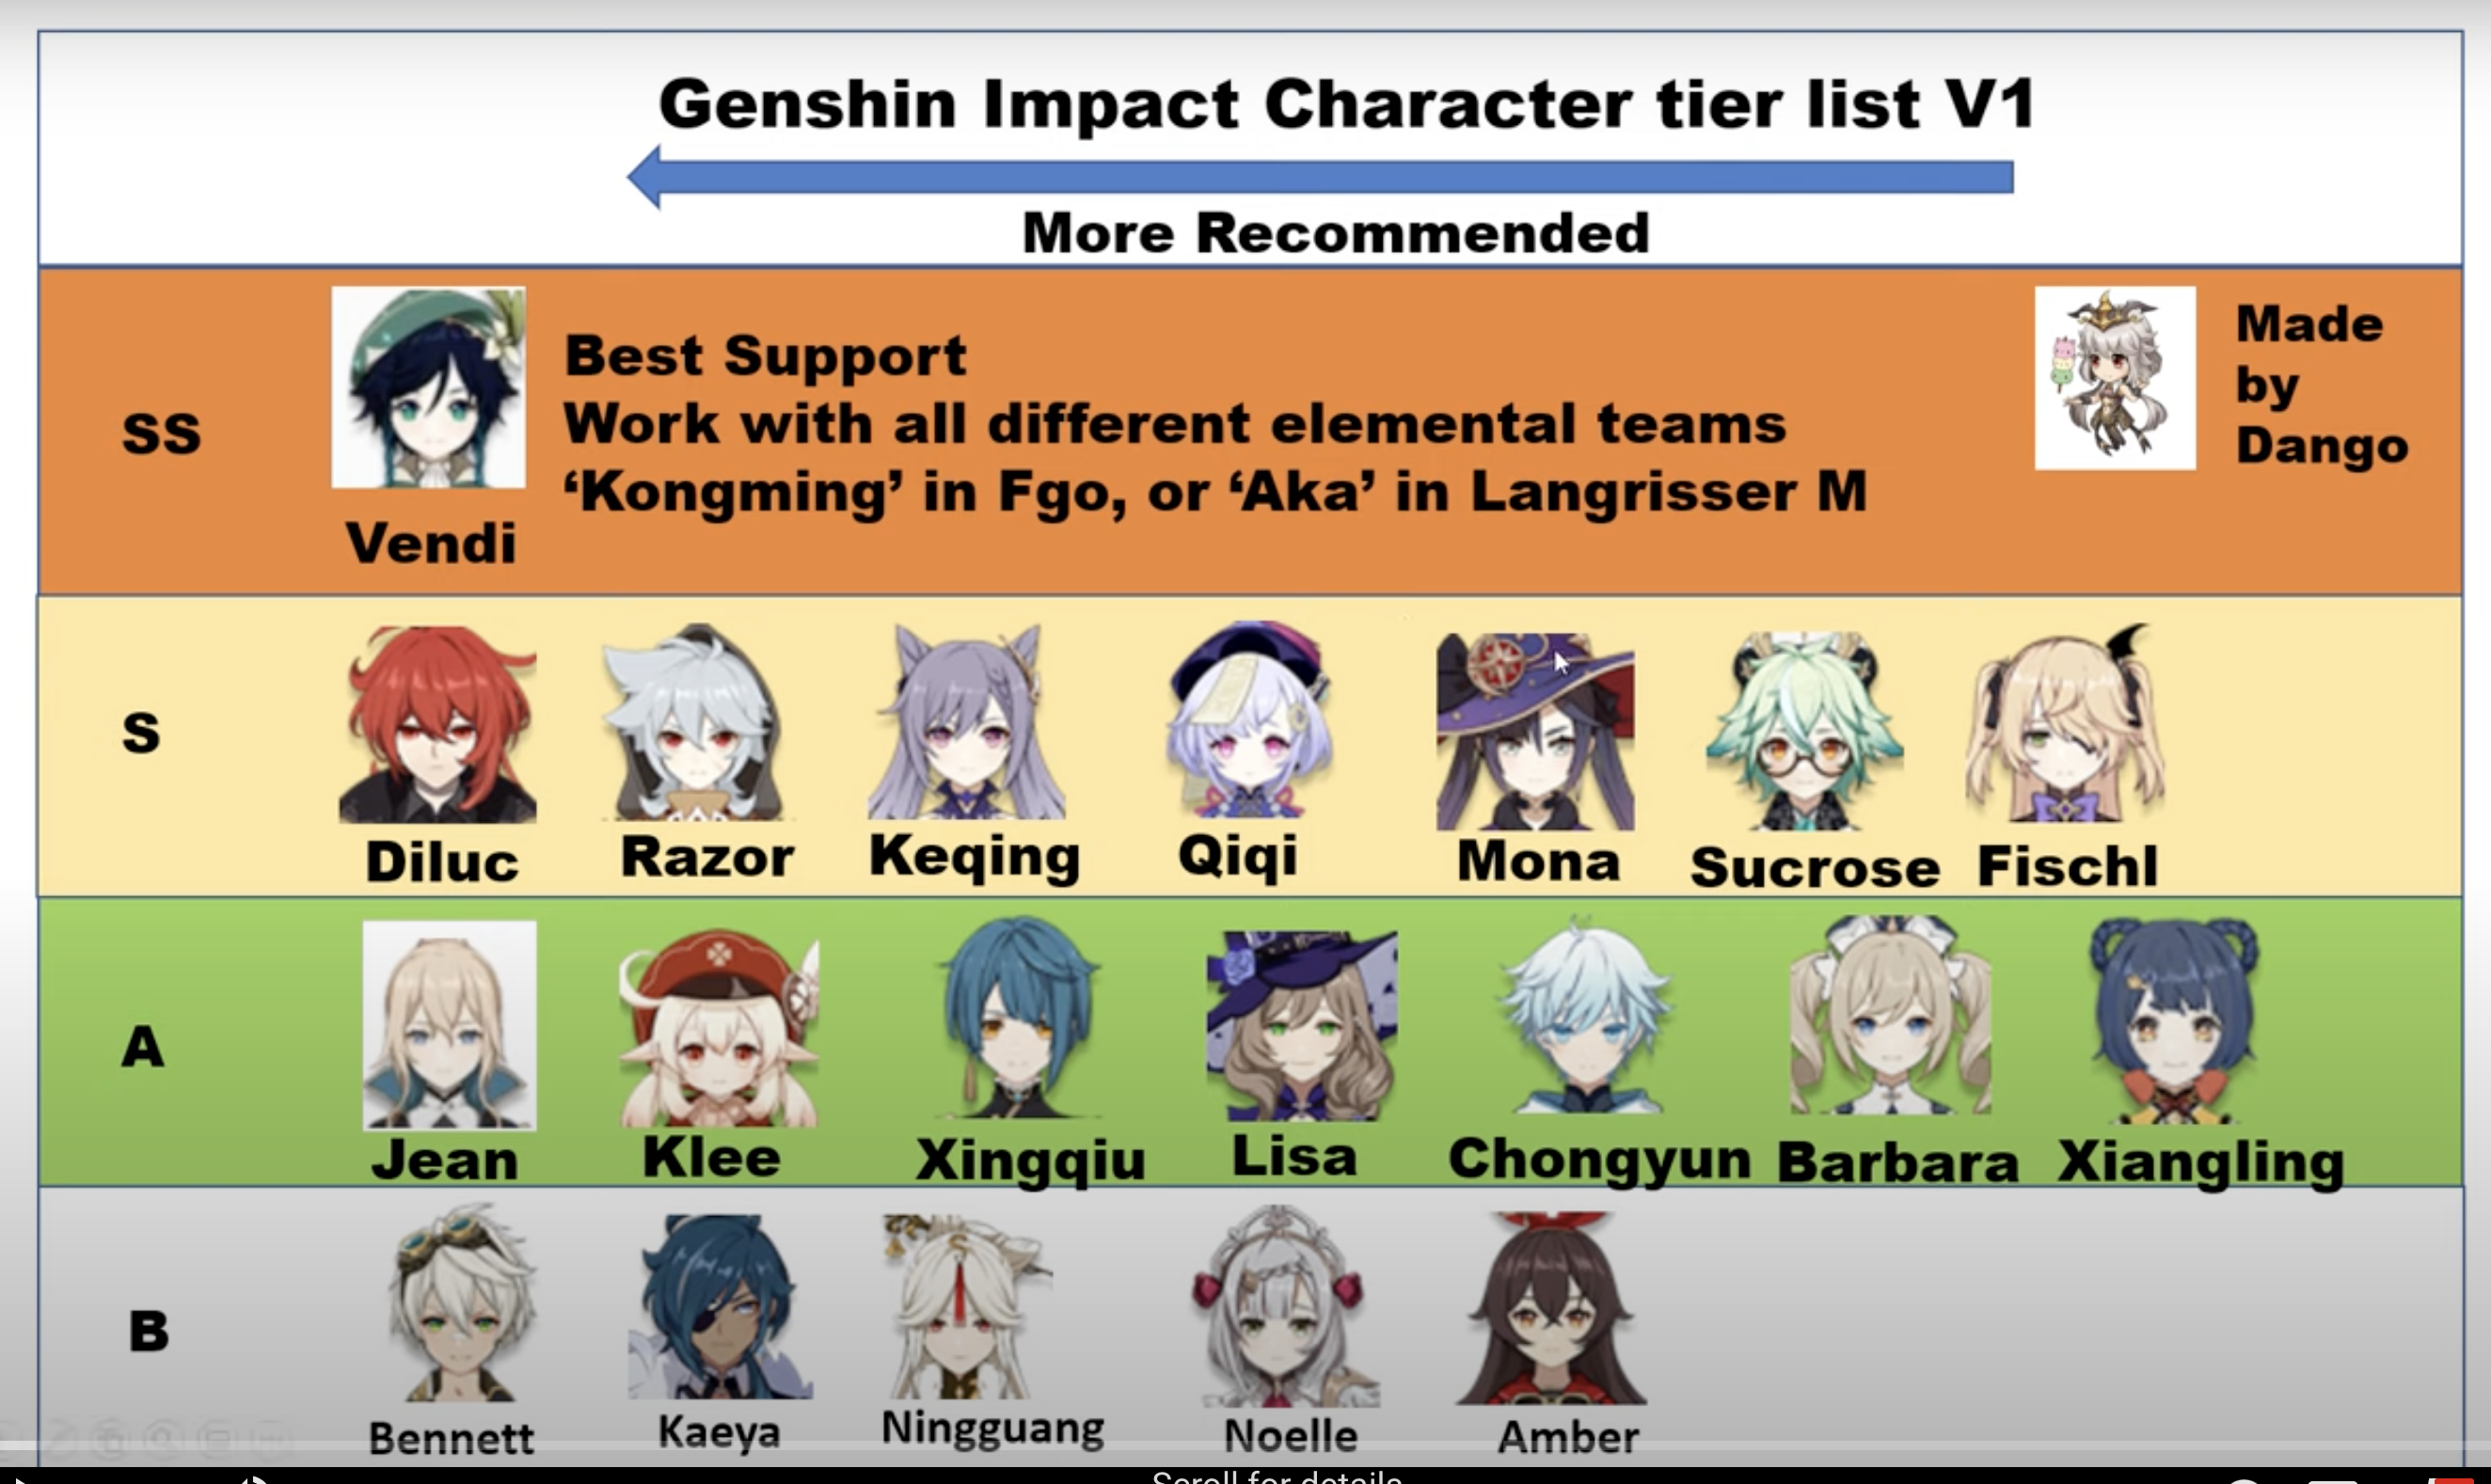 Genshin impact characters list. Геншин персонажи имена. Персонажи Геншина Импакт имена. Genshin Impact персонажи Tier list. Список персов Геншин Импакт.